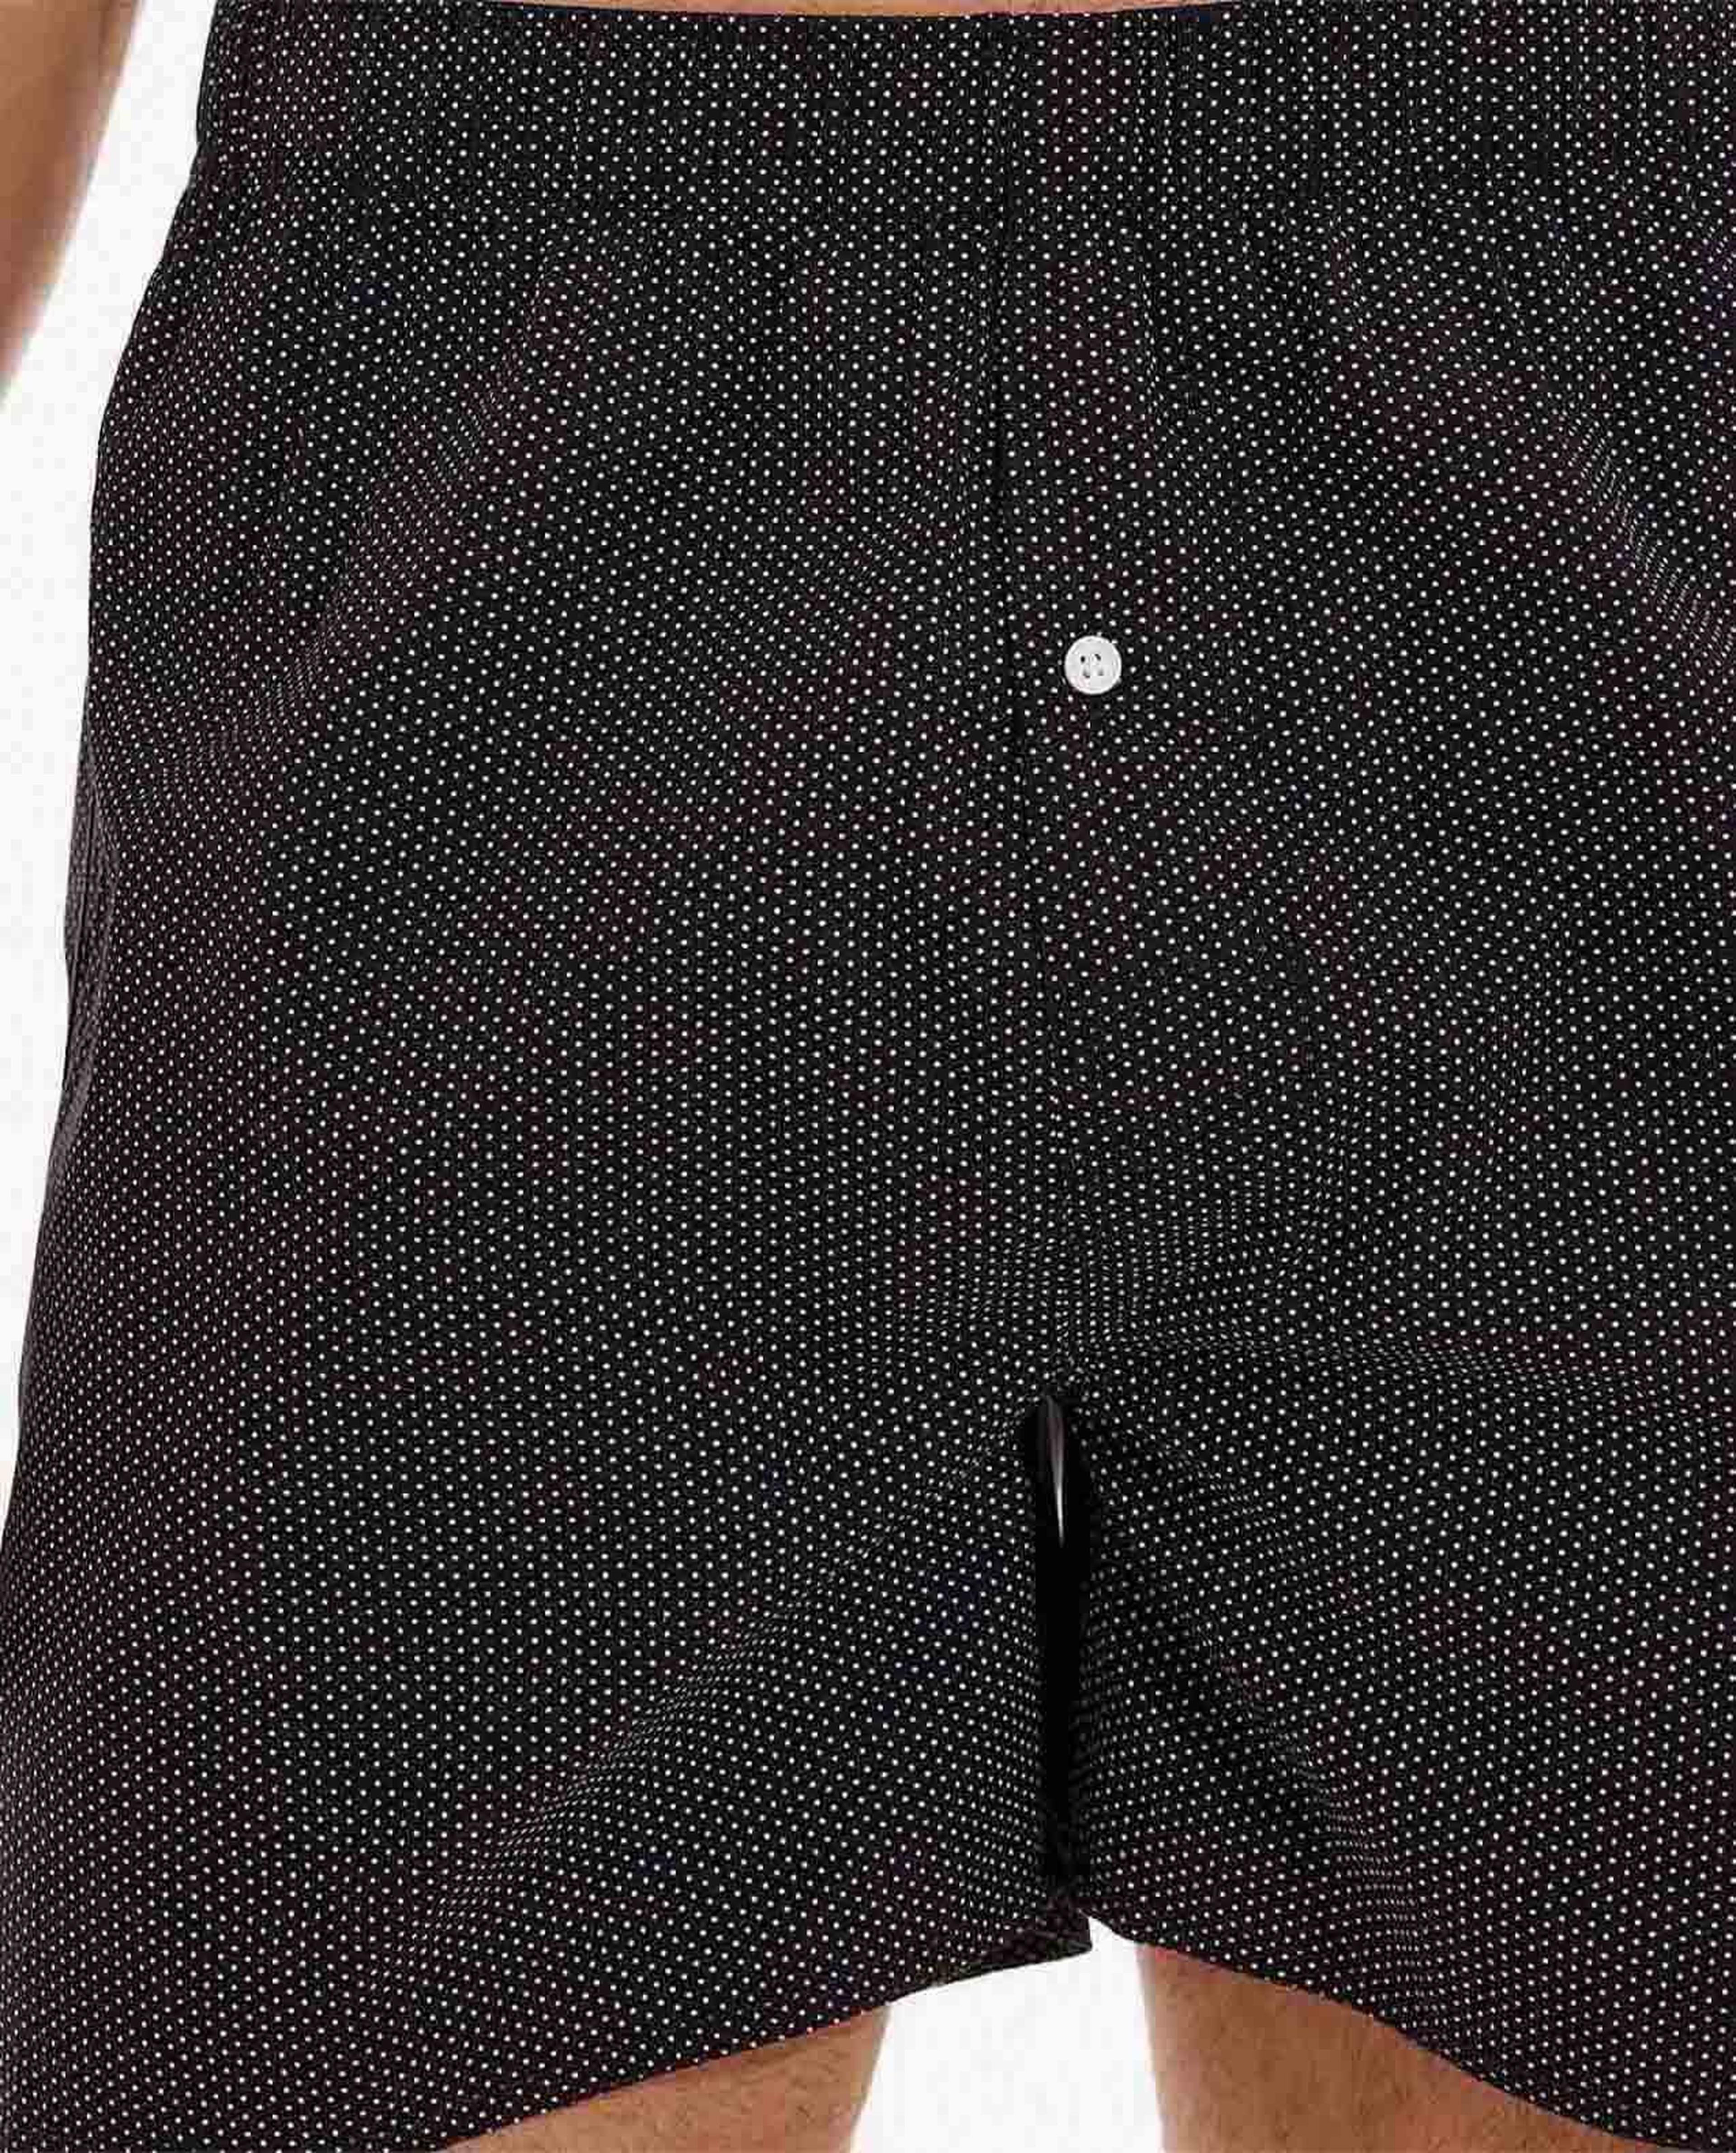 Patterned Boxer Shorts